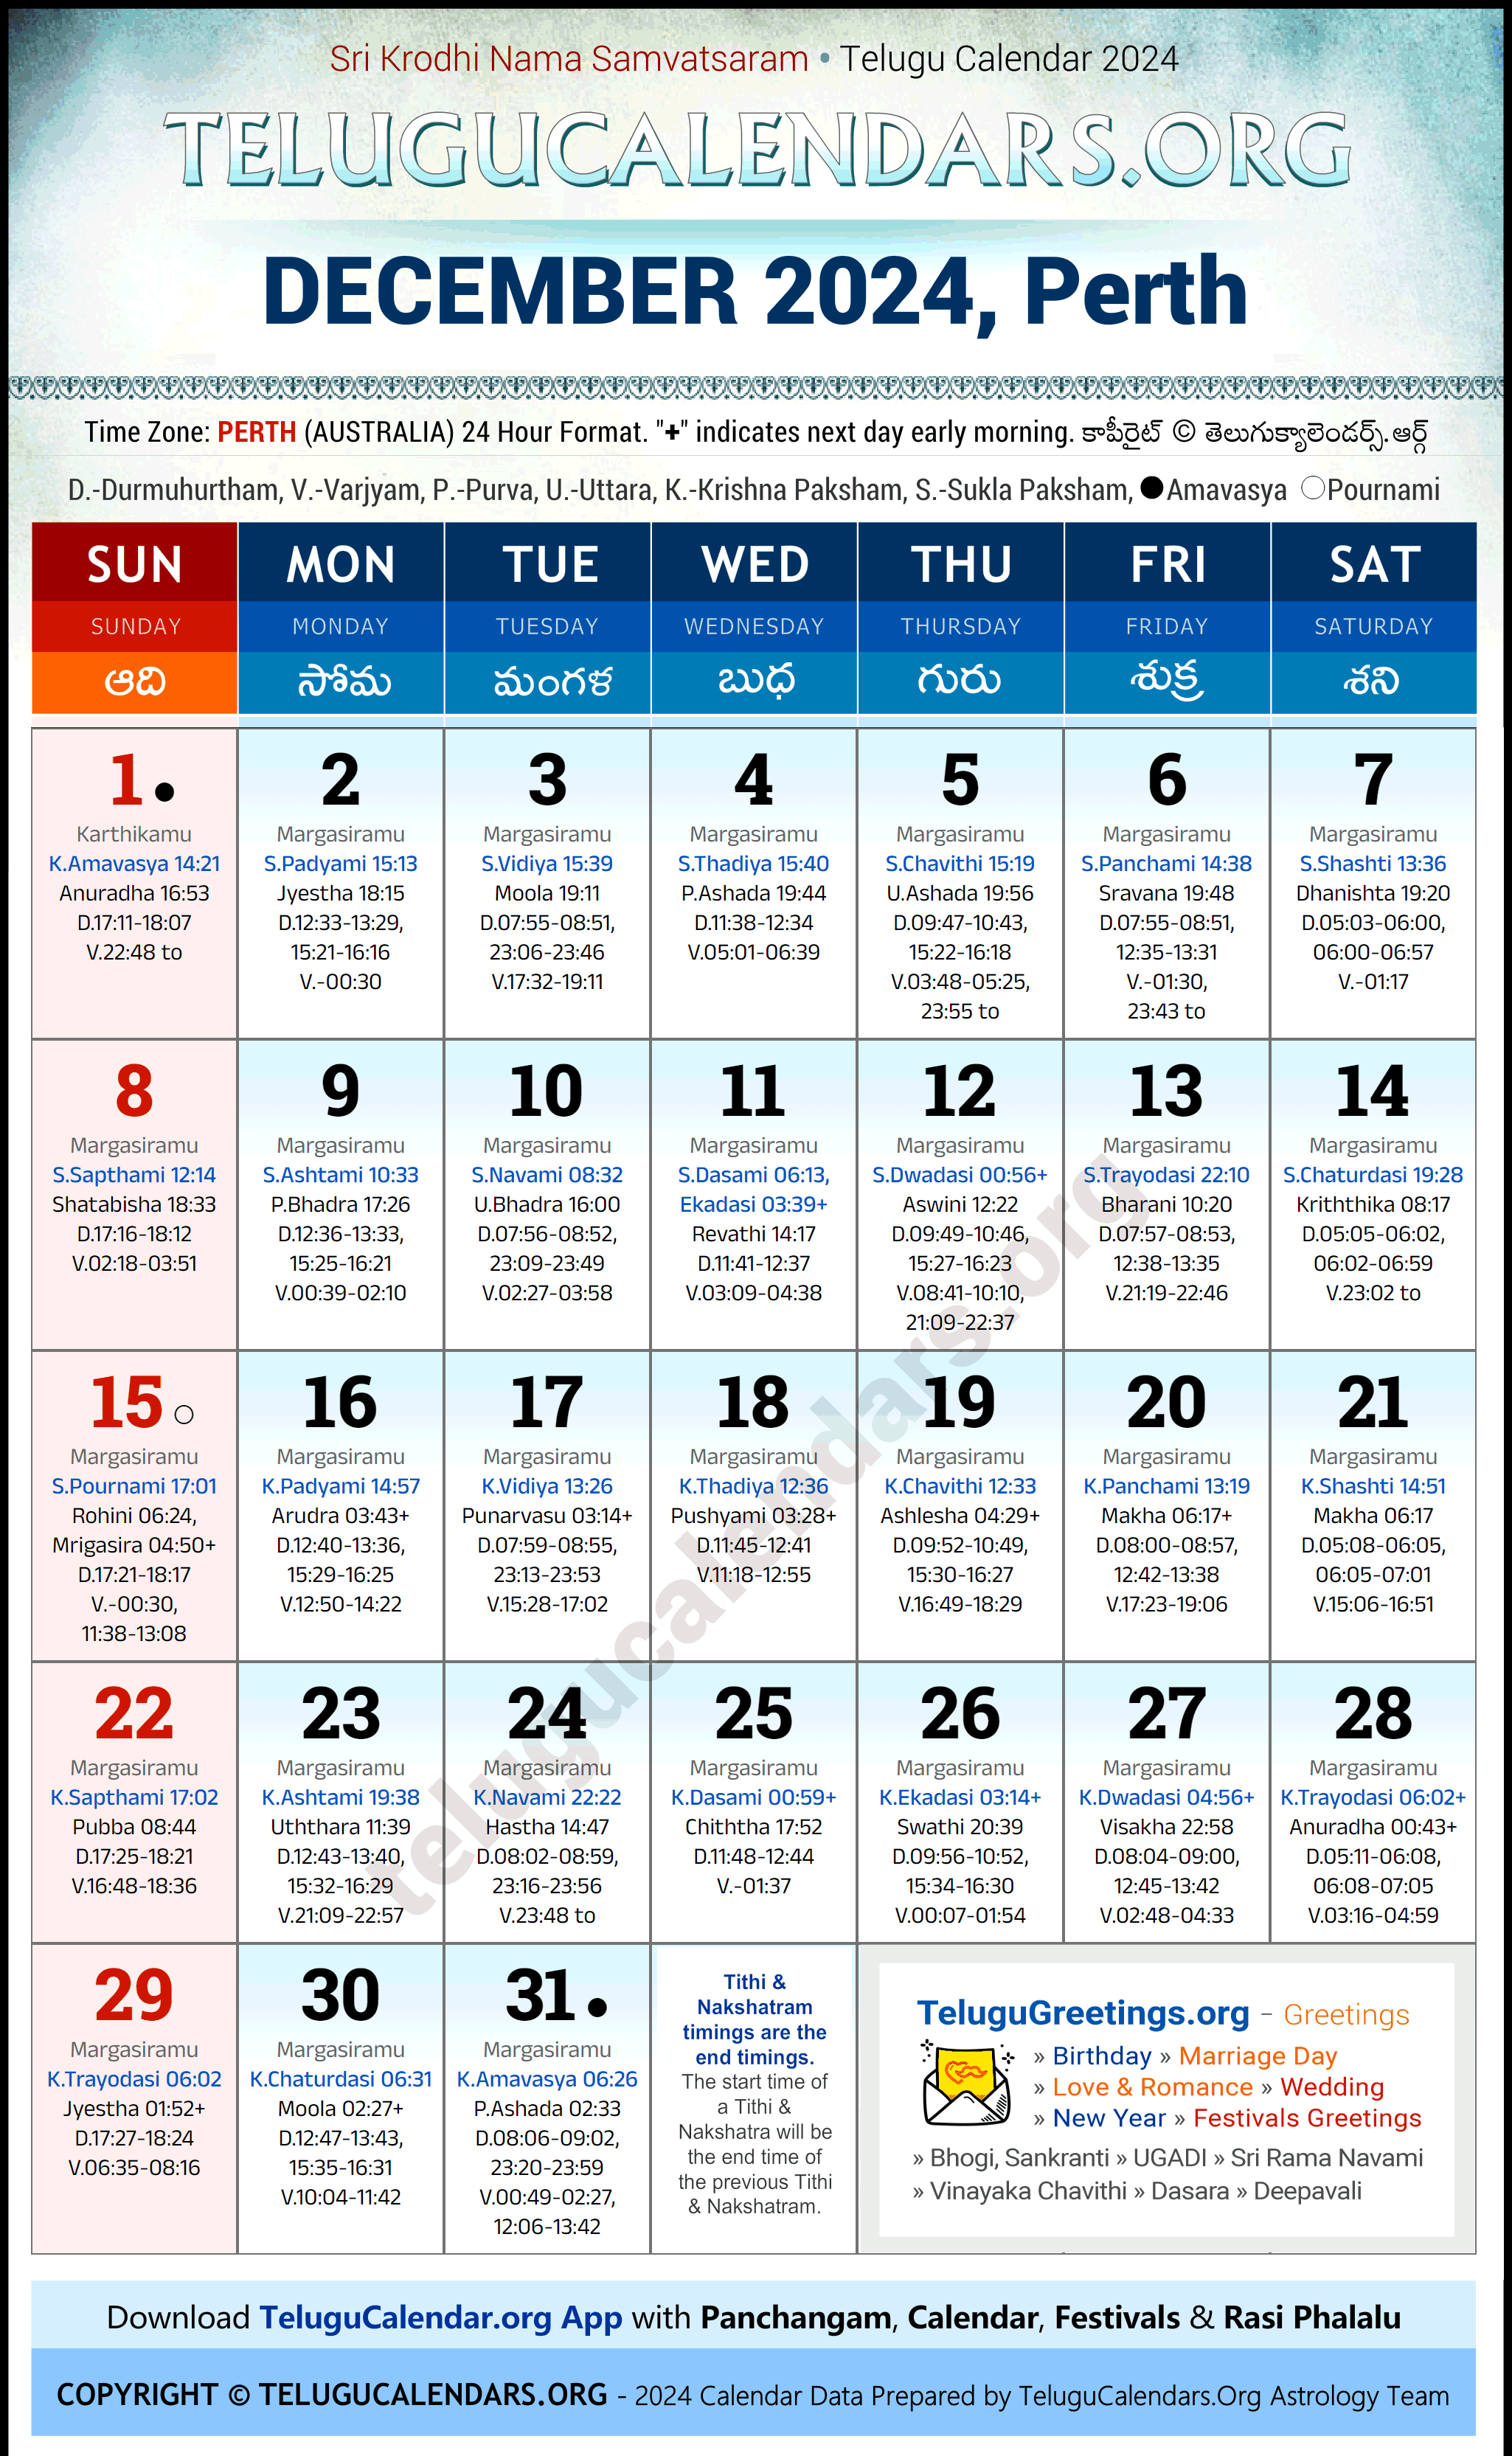 Telugu Calendar 2024 December Festivals for Perth